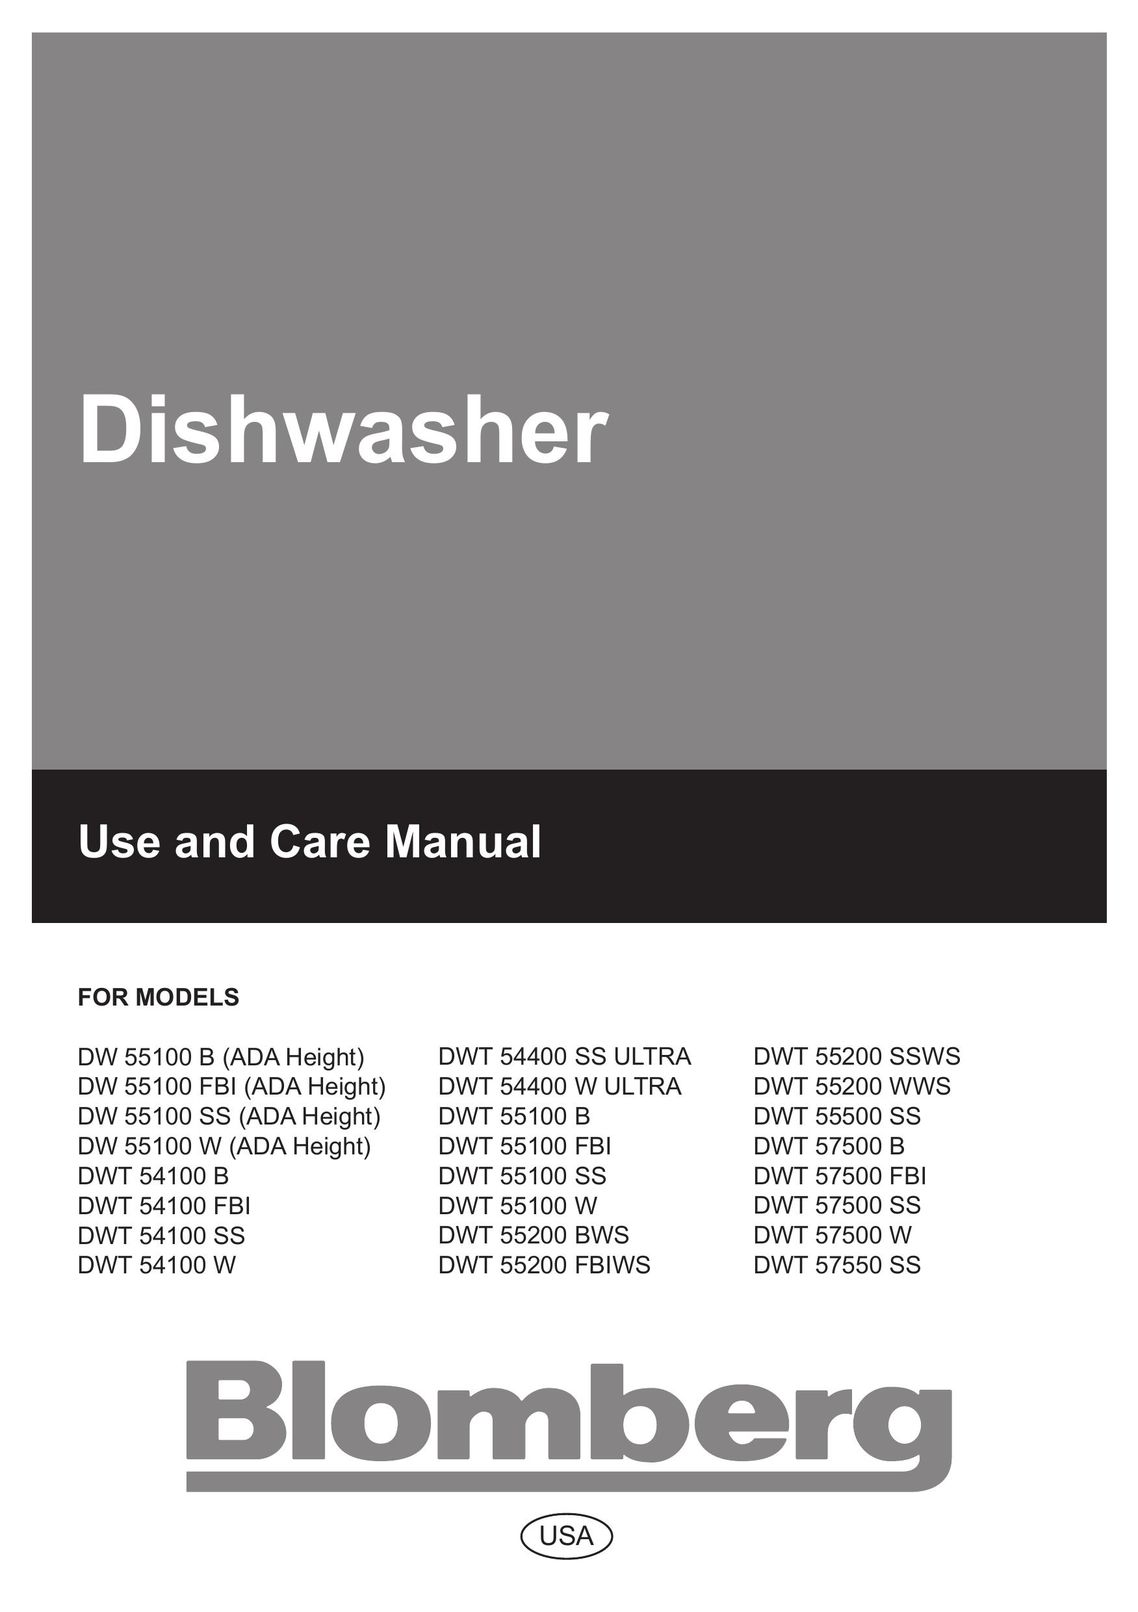 Blomberg DW 55100 W (ADA Height) Dishwasher User Manual